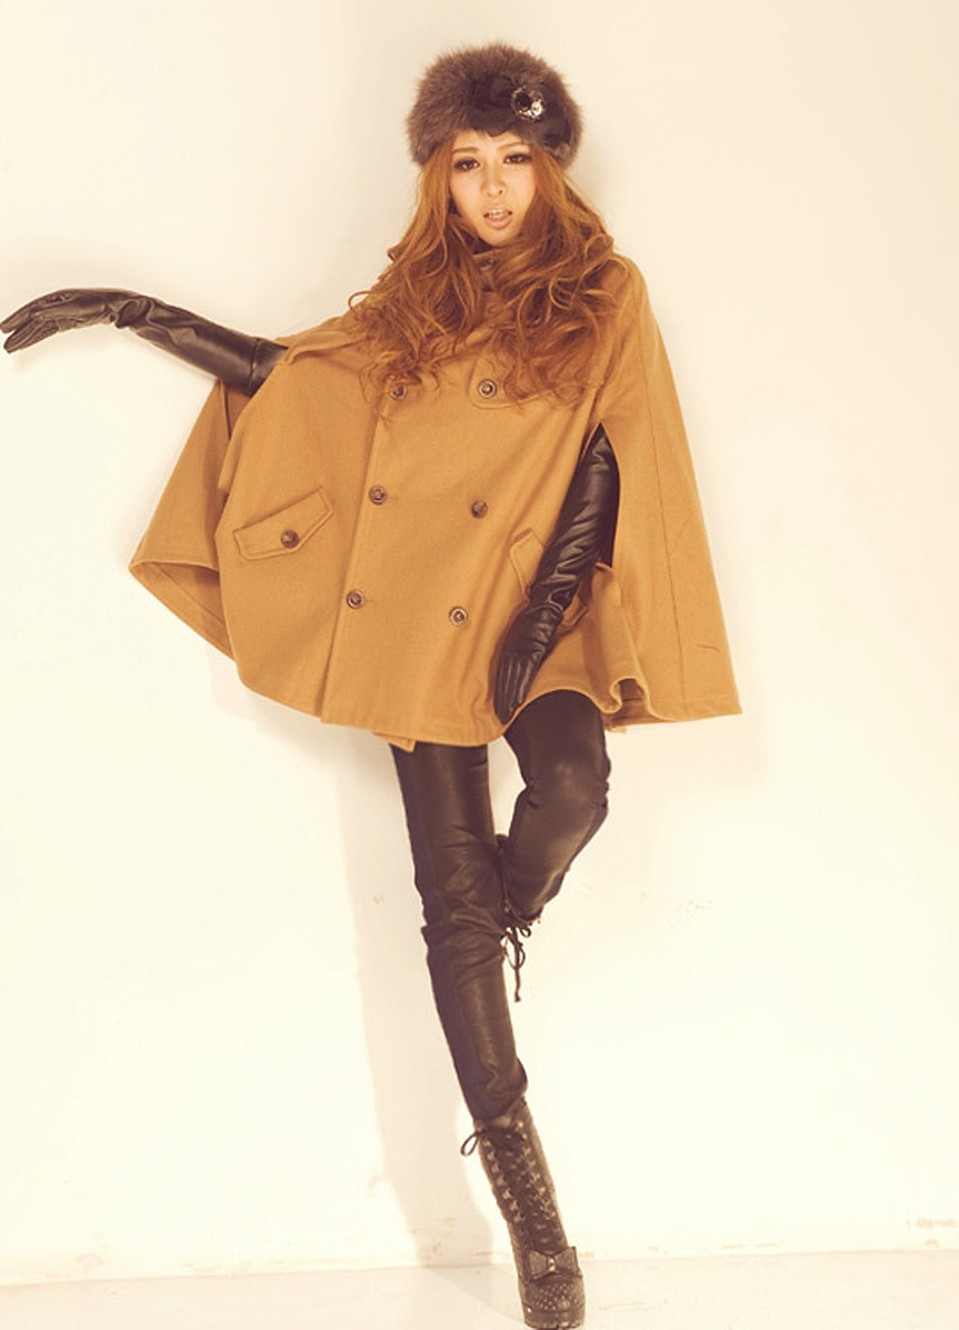 Кейп - пальто-накидка с прорезями для рук. Фото с сайта: casual-clothes.ru 